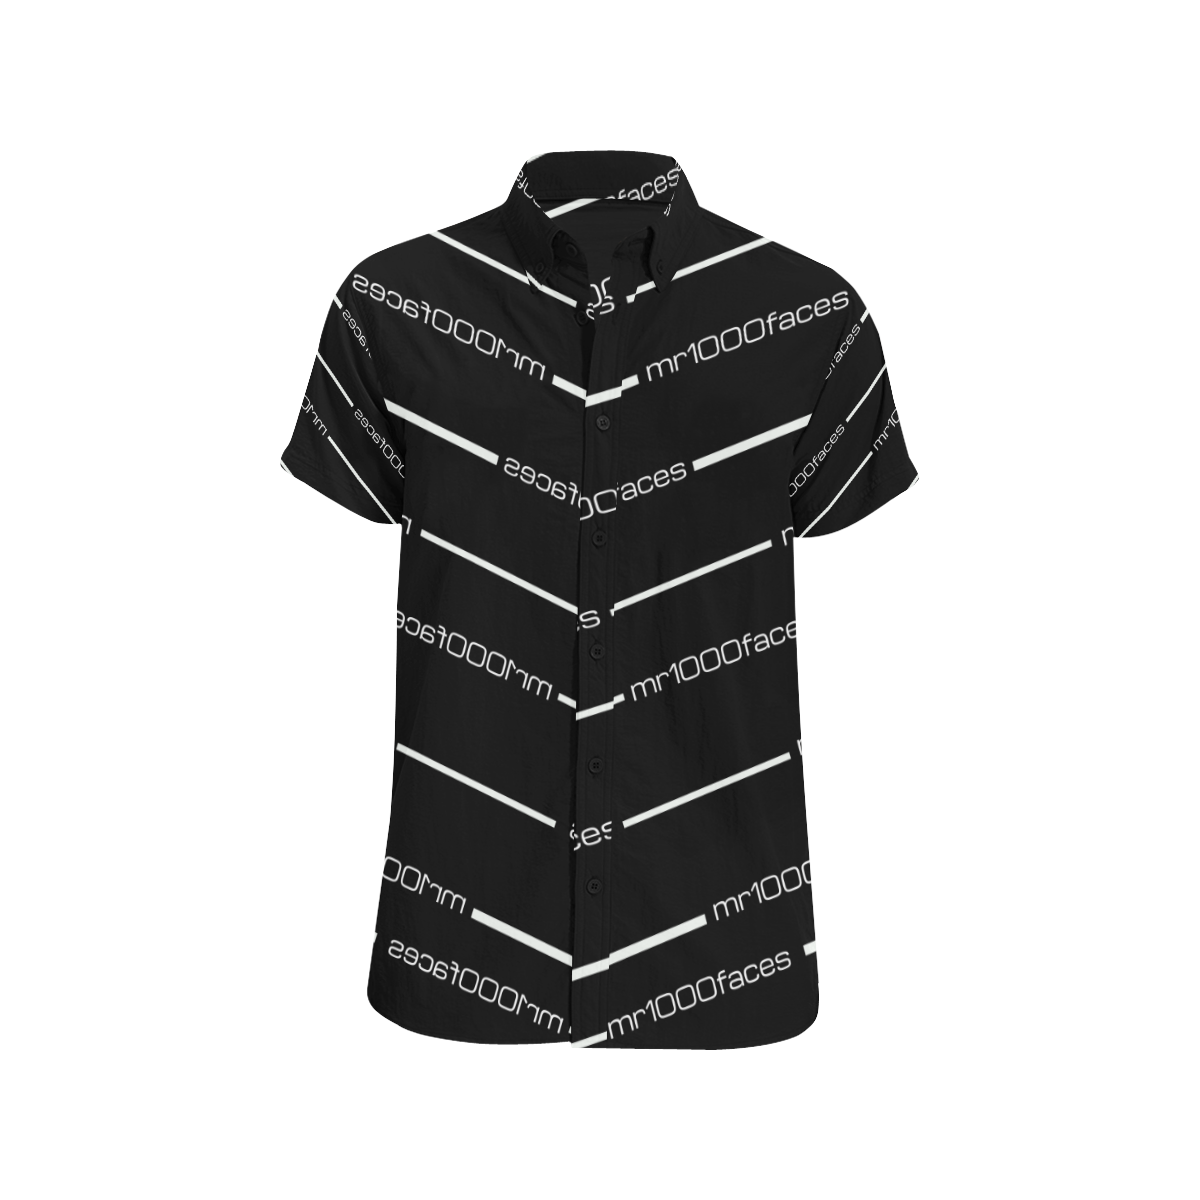 mr1000faces2 Men's All Over Print Short Sleeve Shirt/Large Size (Model T53)